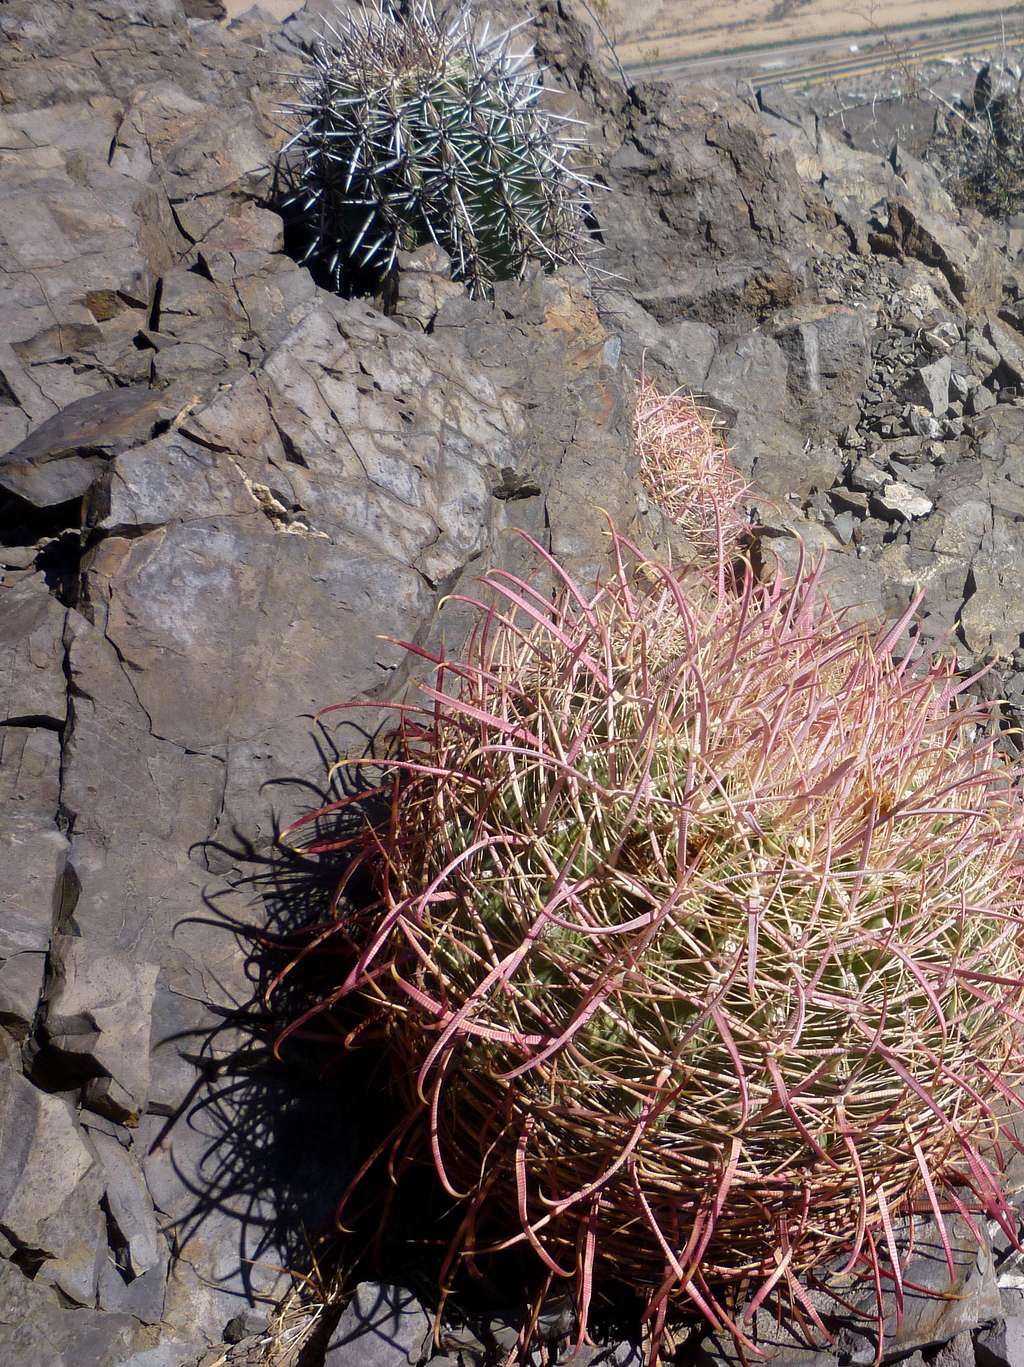 Fishhook Barrel Cactus near summit